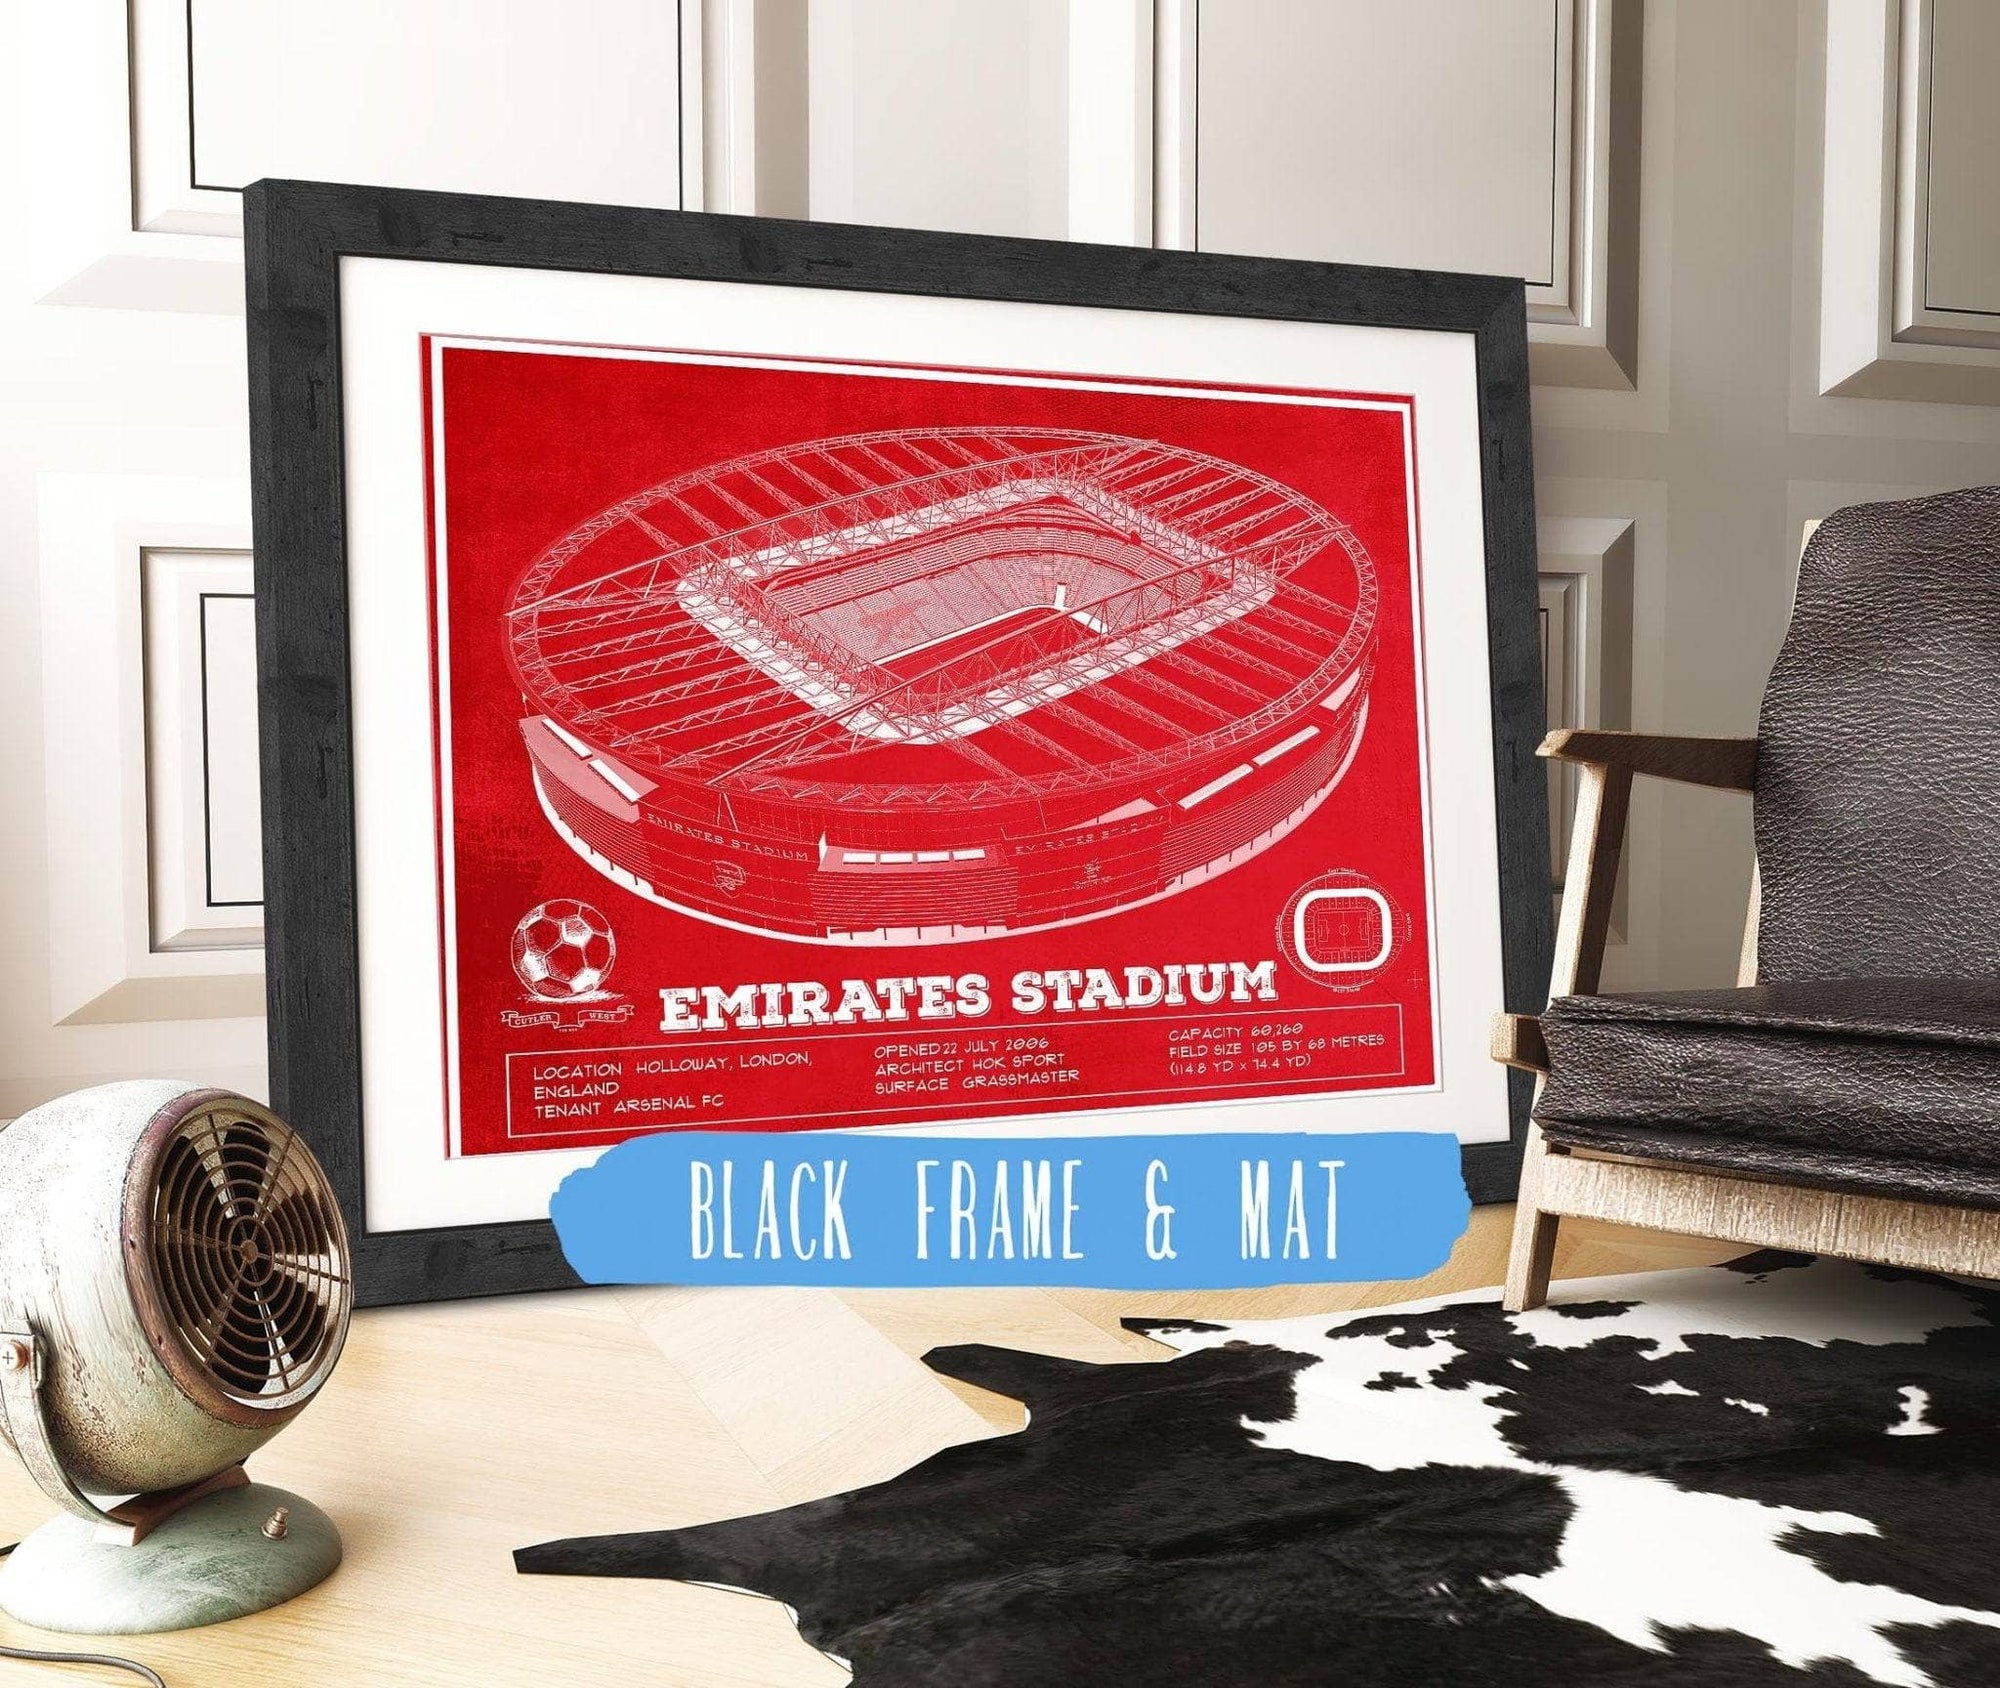 Cutler West Soccer Collection 14" x 11" / Black Frame & Mat Arsenal Football Club - Emirates Stadium Soccer Print 936994111-TOP